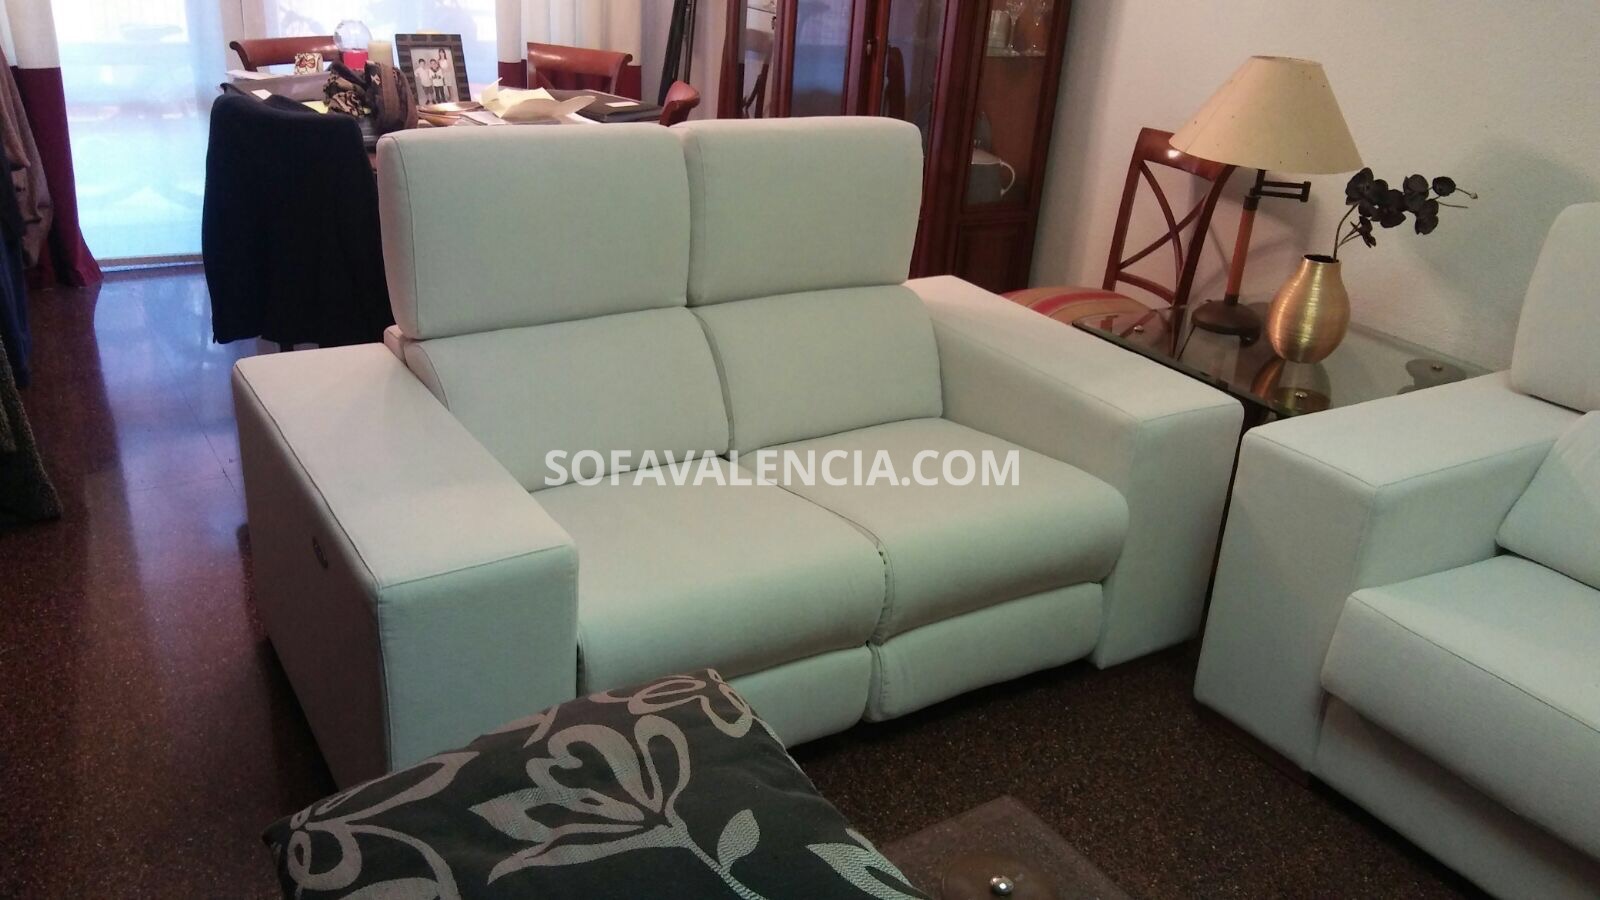 sofa-valencia-fotos-clientes-69